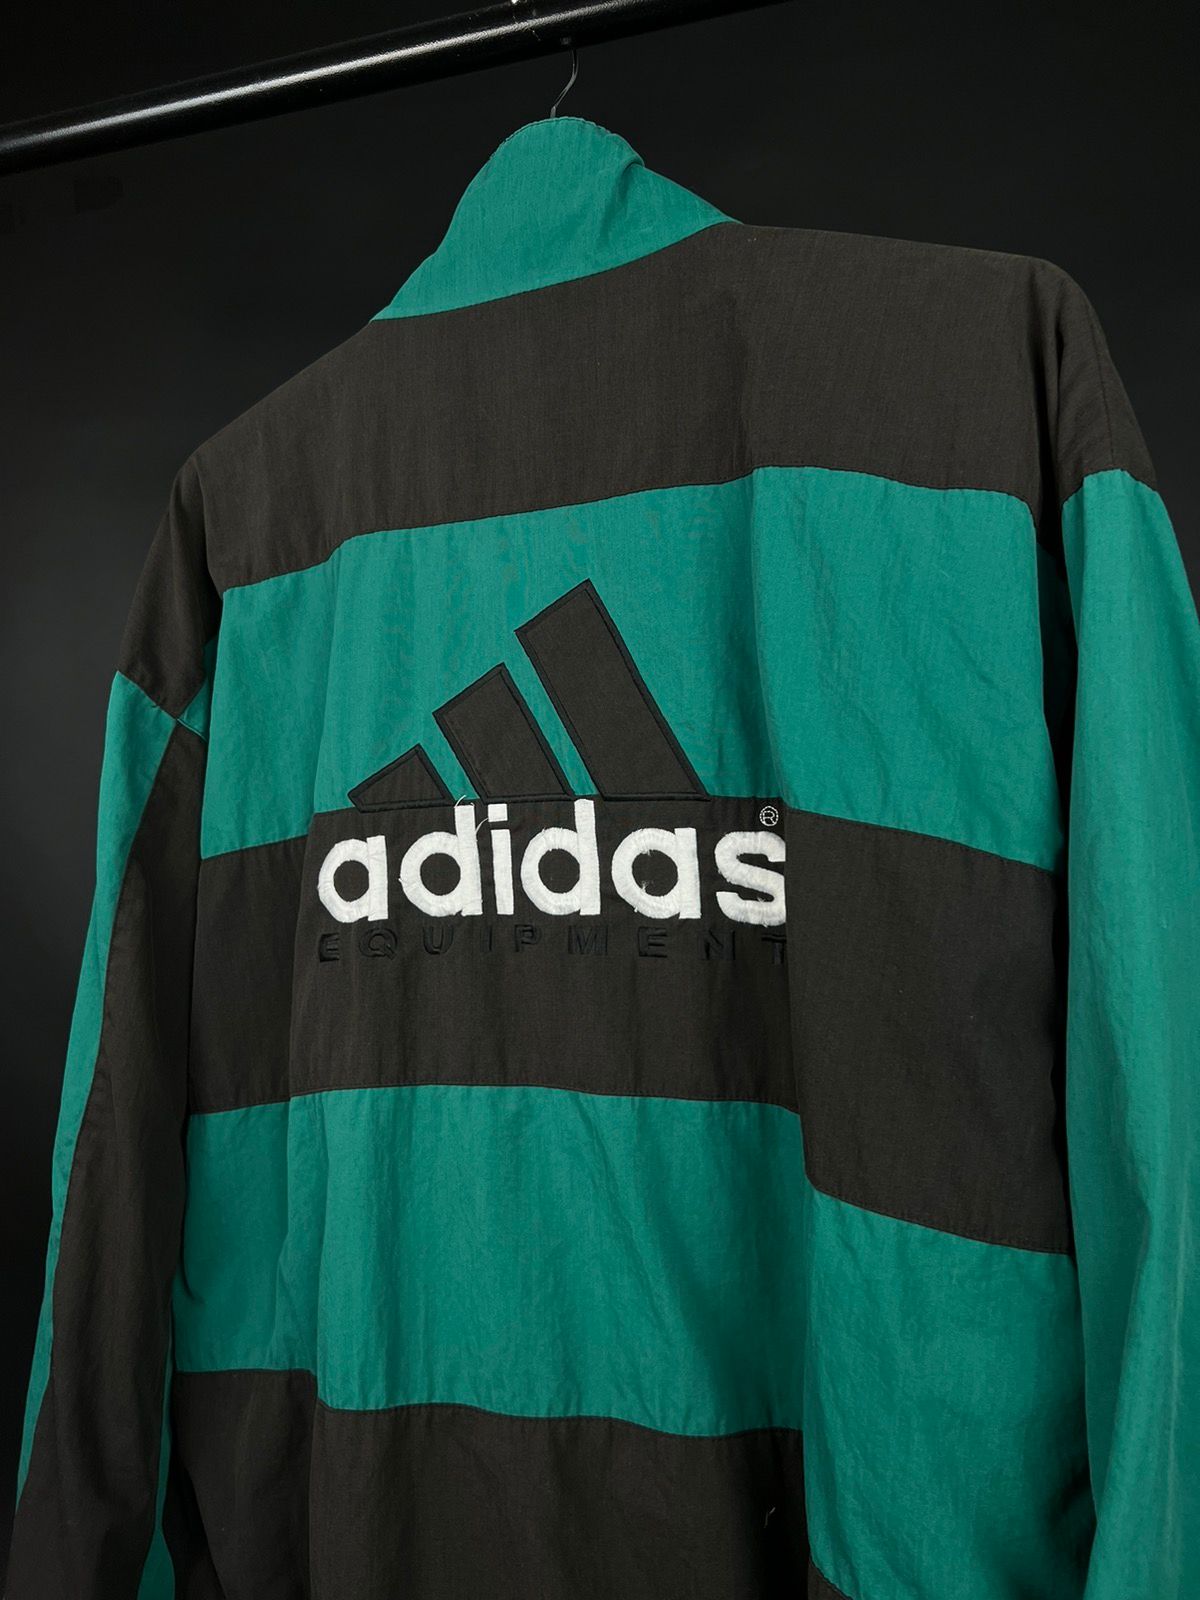 Adidas VTG windbreaker jacket Adidas green with black full Zip Size US XL / EU 56 / 4 - 7 Preview